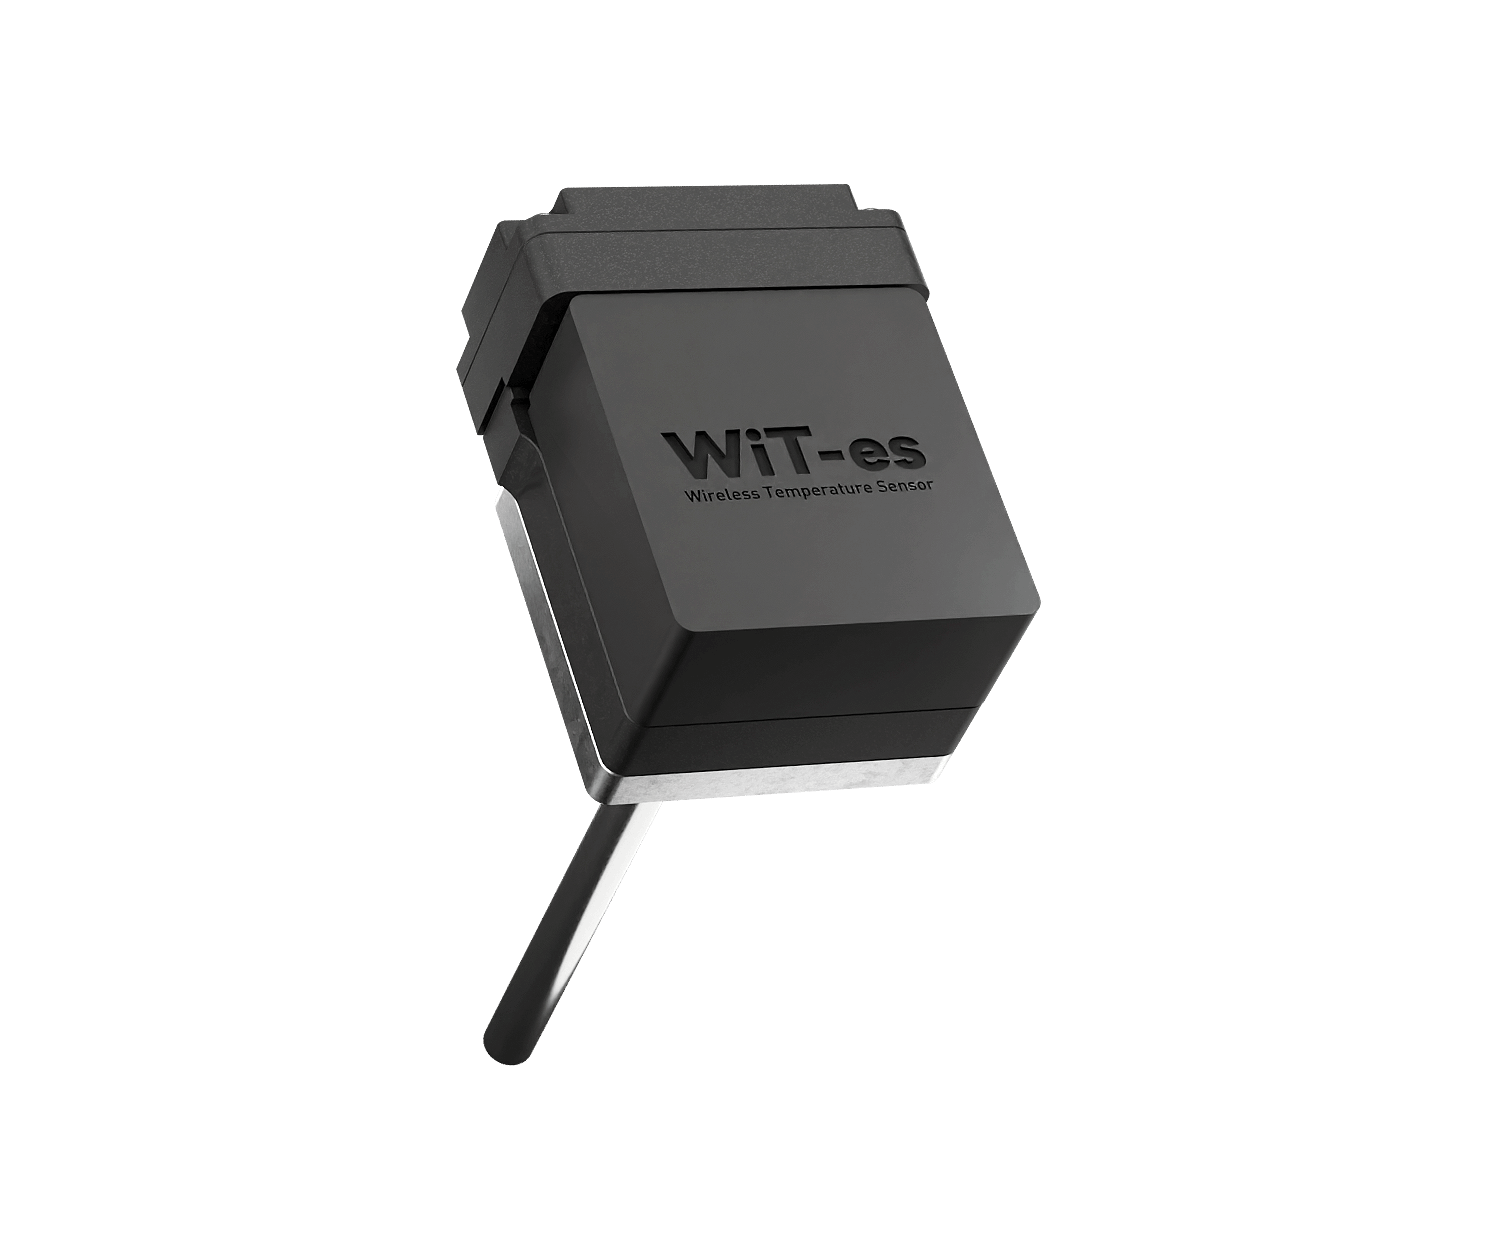 Wit-es • Wireless Batteryless Temperature Sensor